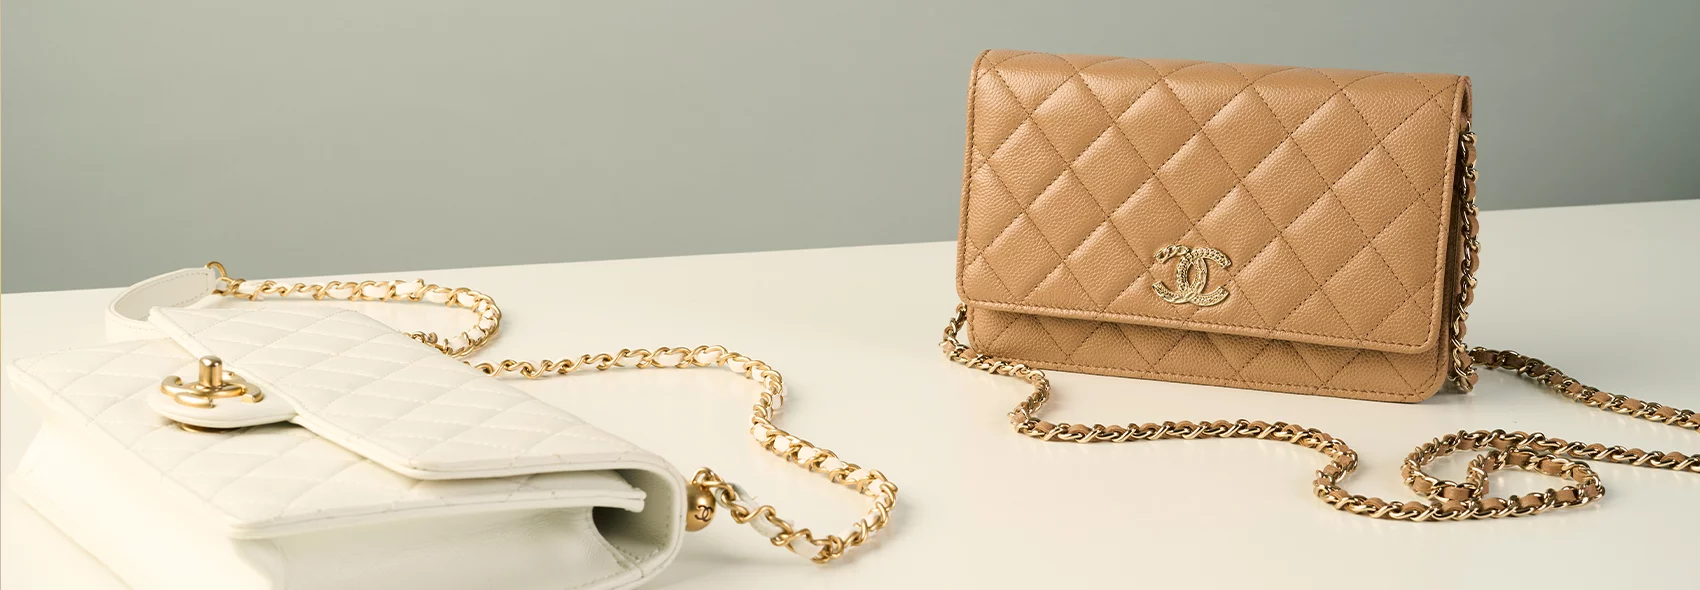 How to Sell Your Chanel Handbag